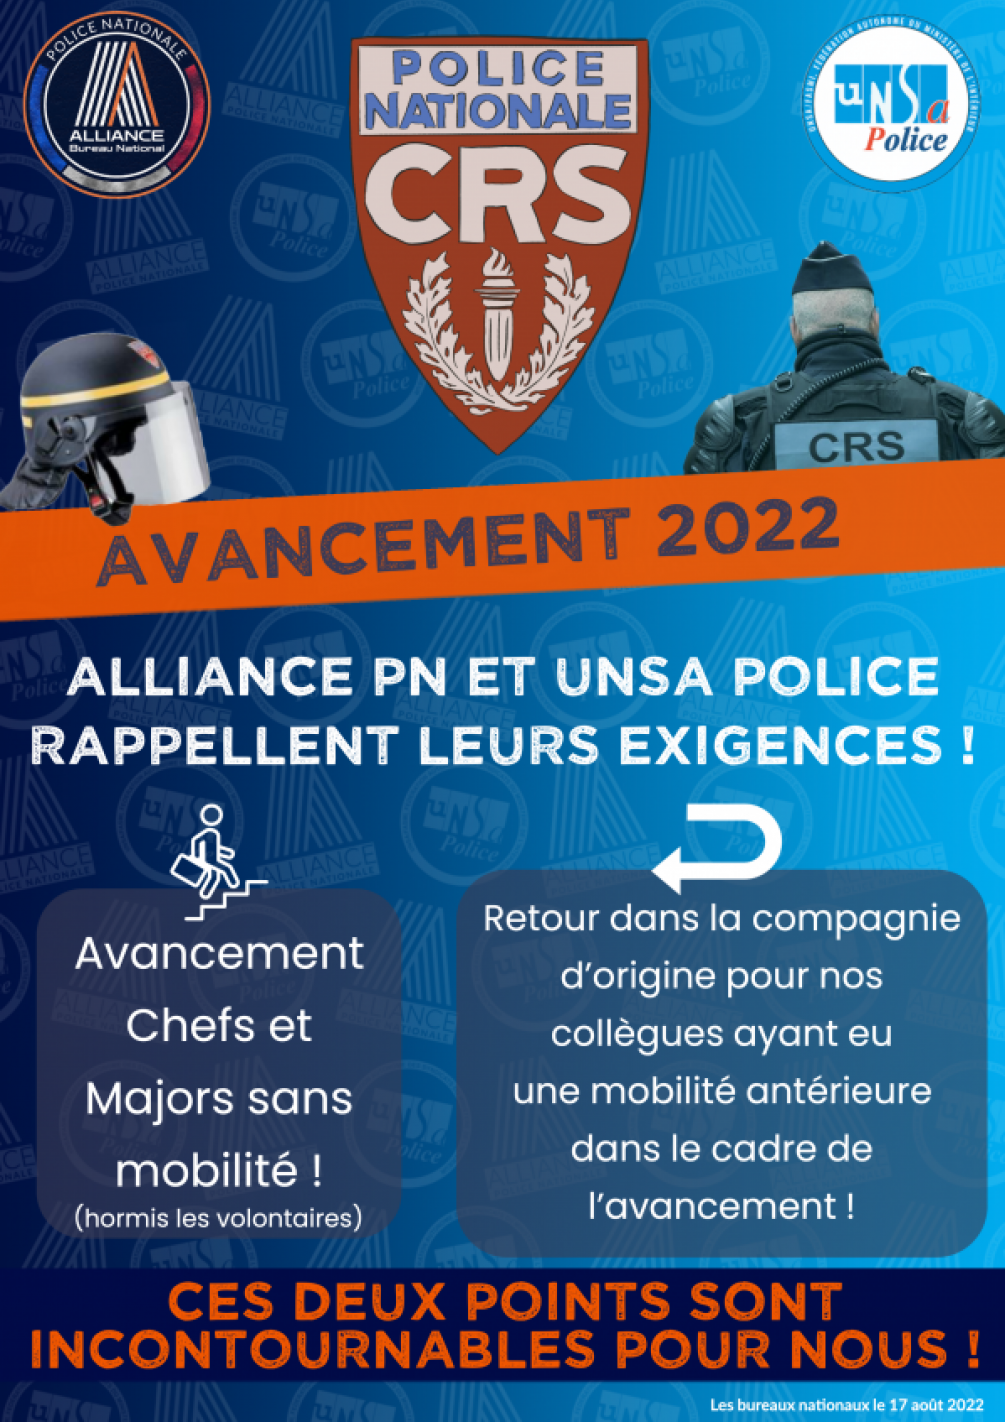 Alliance UNSA CRS Avancement 2022